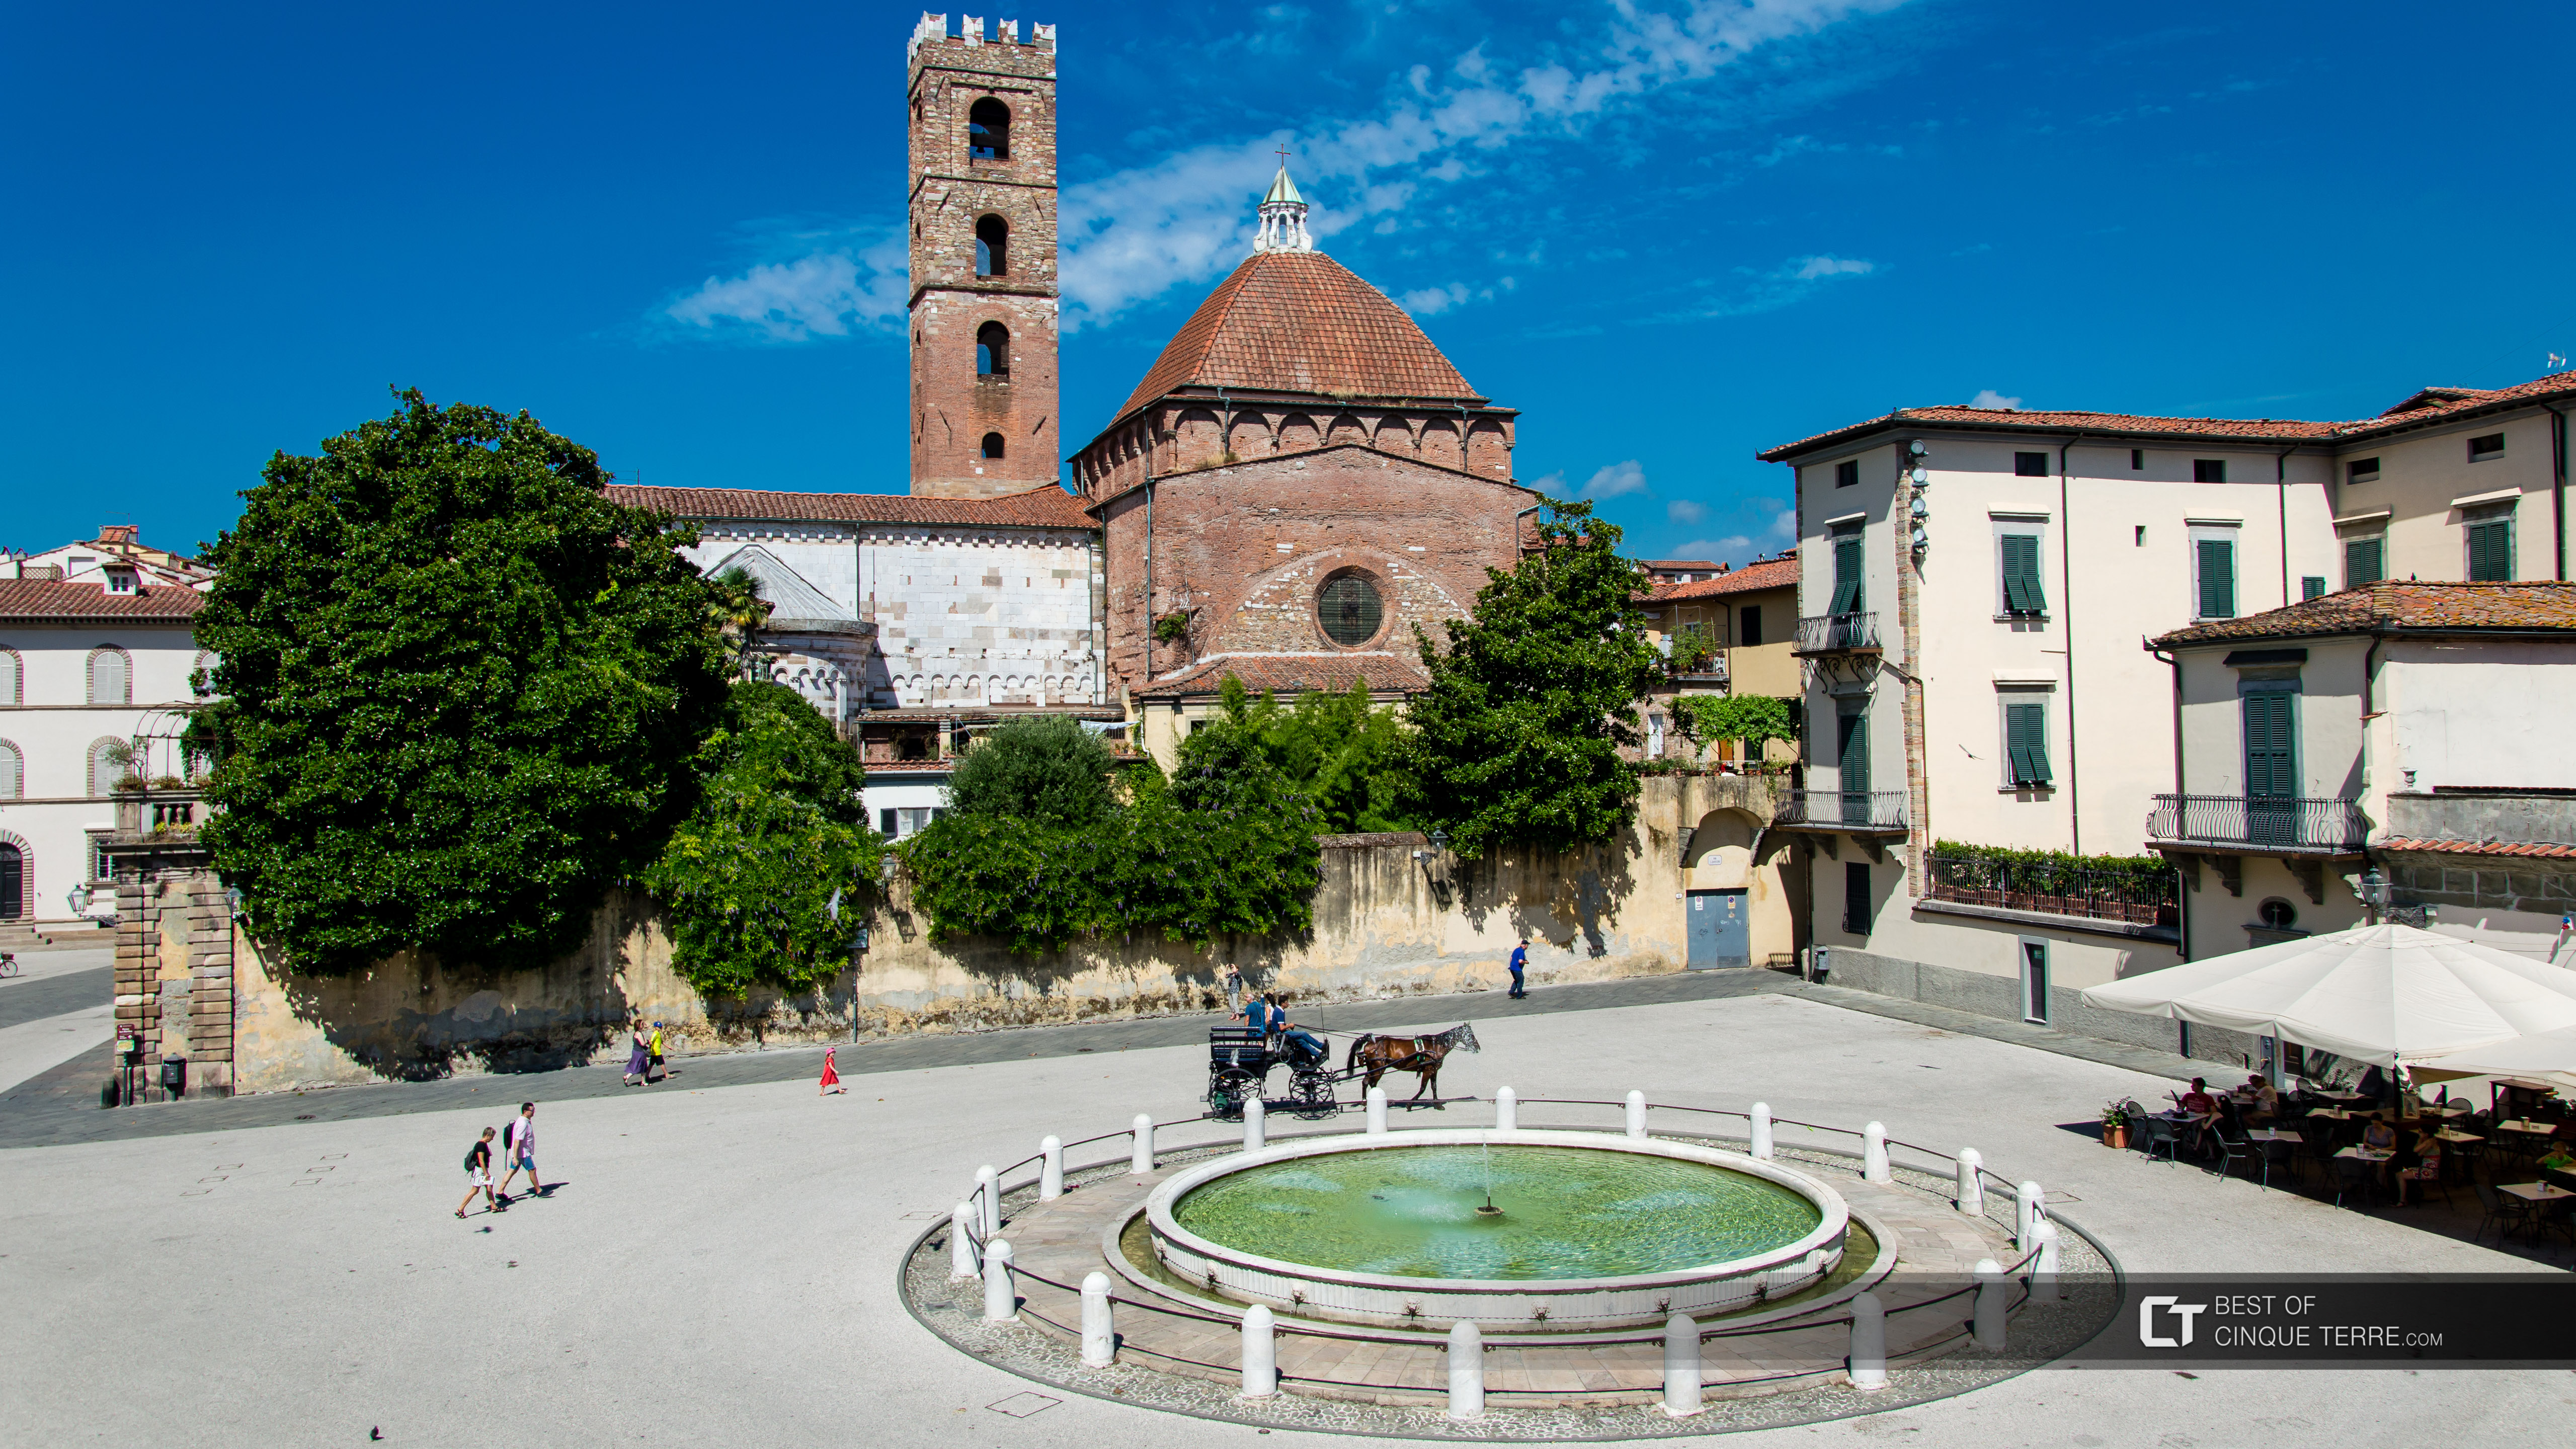 Piazza Antelminelli und der Kirchturm der Chiesa dei Santi Giovanni e Reparata, Lucca, Italien